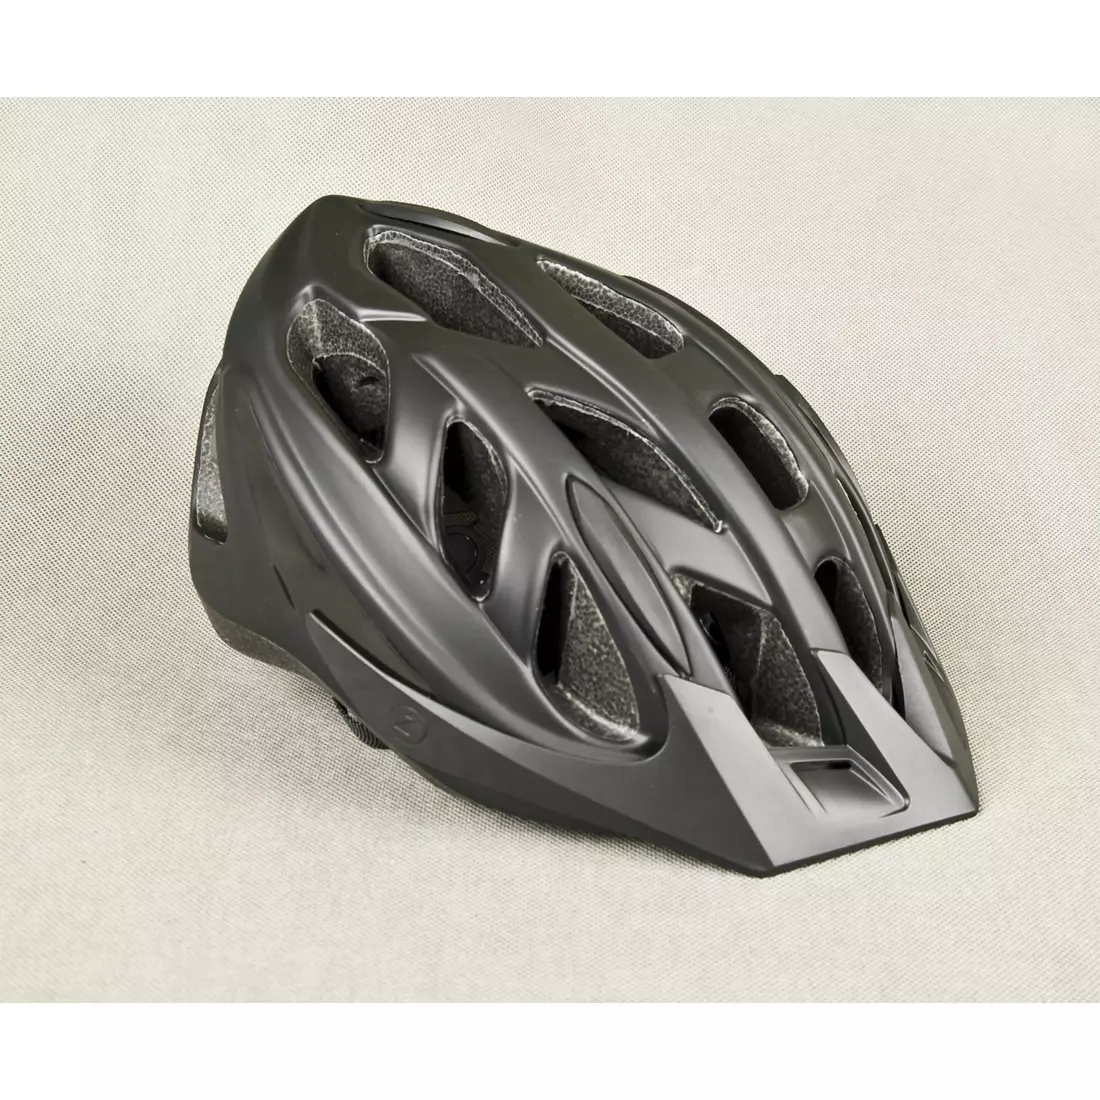 MTB cyklistická helma LAZER - CYCLONE, barva: černá matná